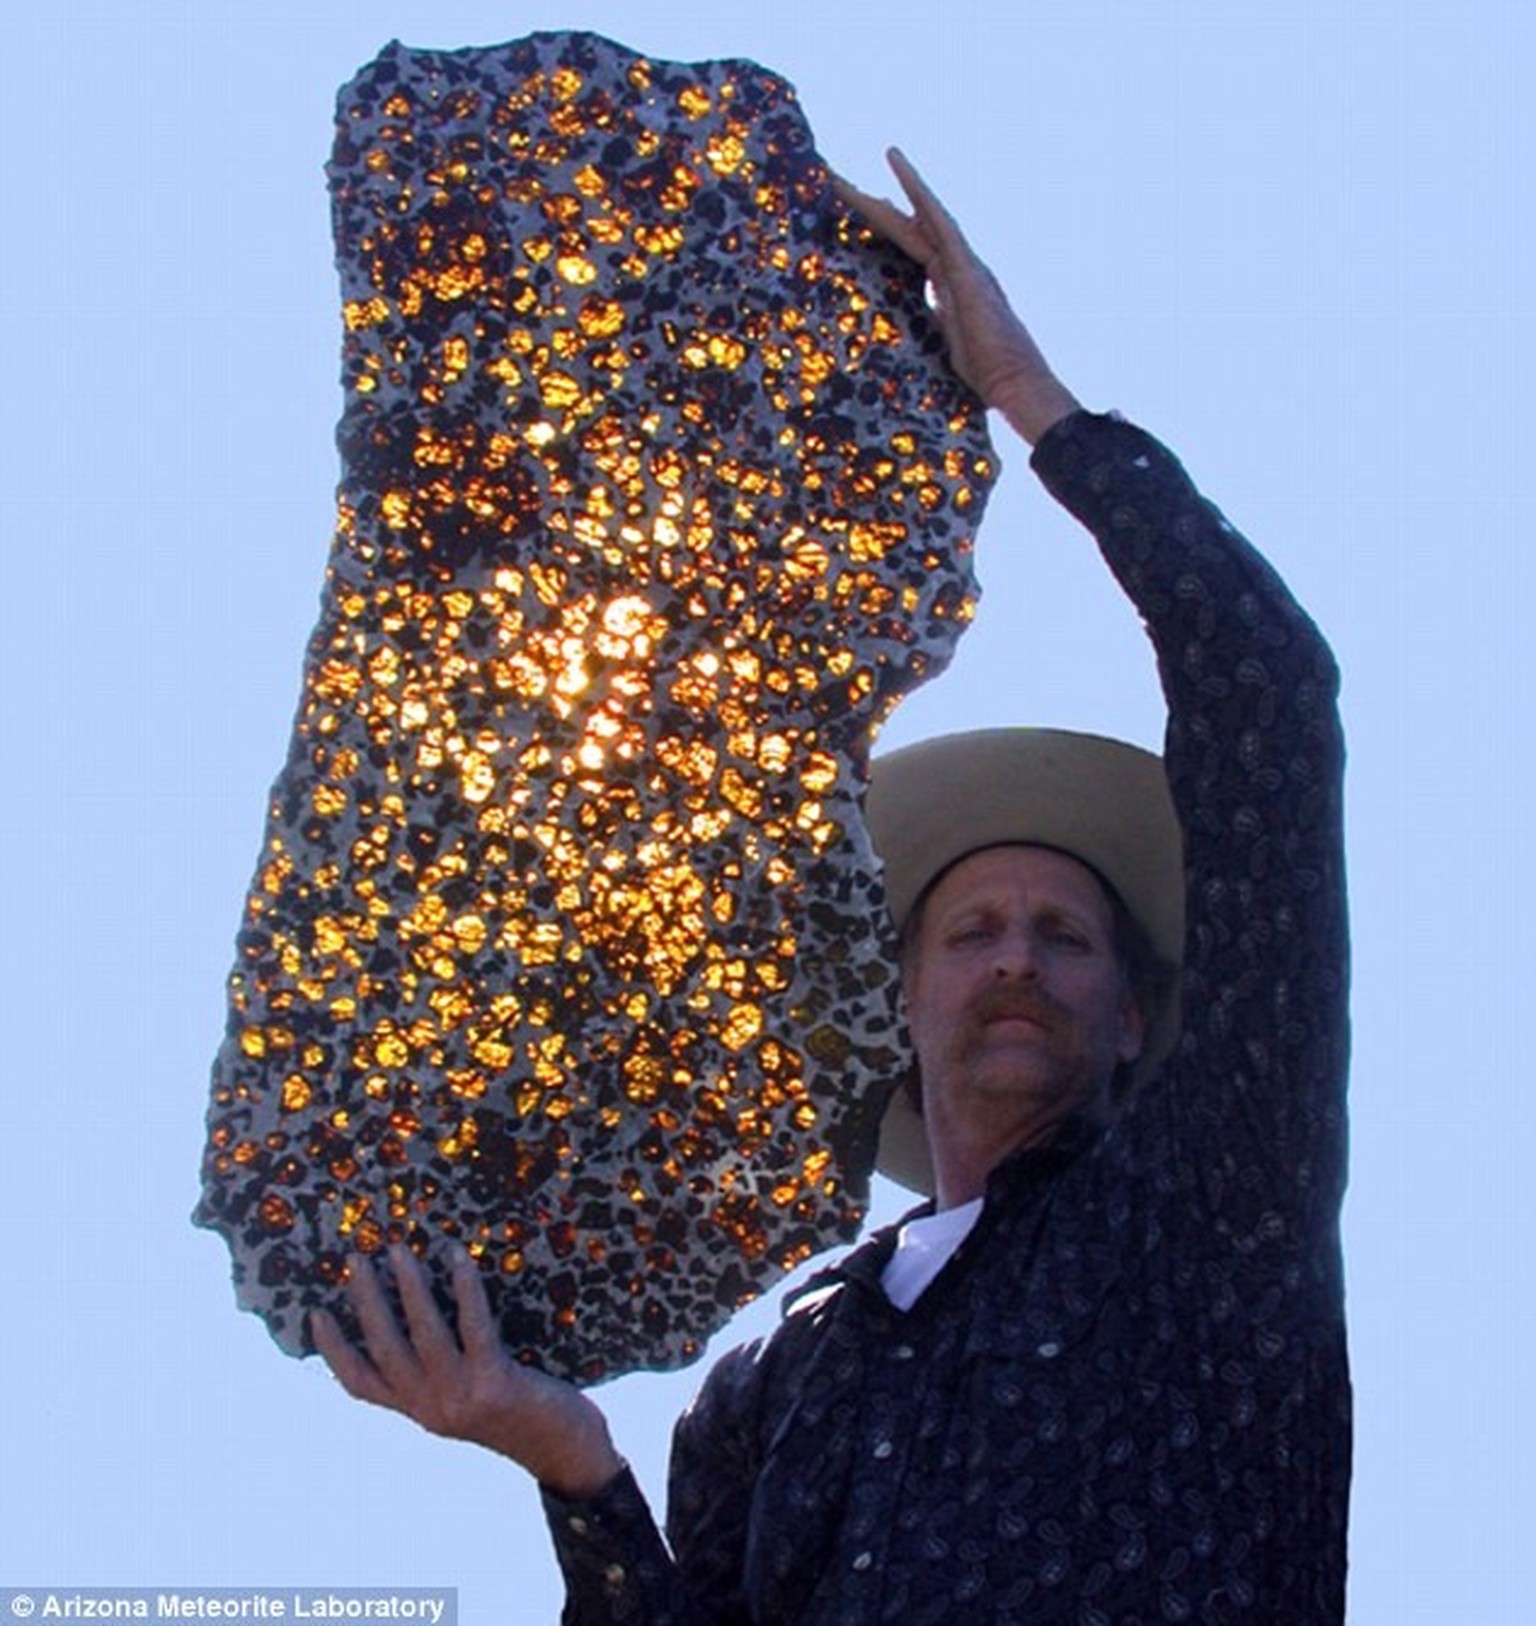 Fukang-Meteorit: Marvin Killgore of the Arizona Meteorite Laboratory lets the sun shine through a polished slice of the Fukang rock.
https://meteoritelab.com/2020/08/cowboy-and-meteorite/